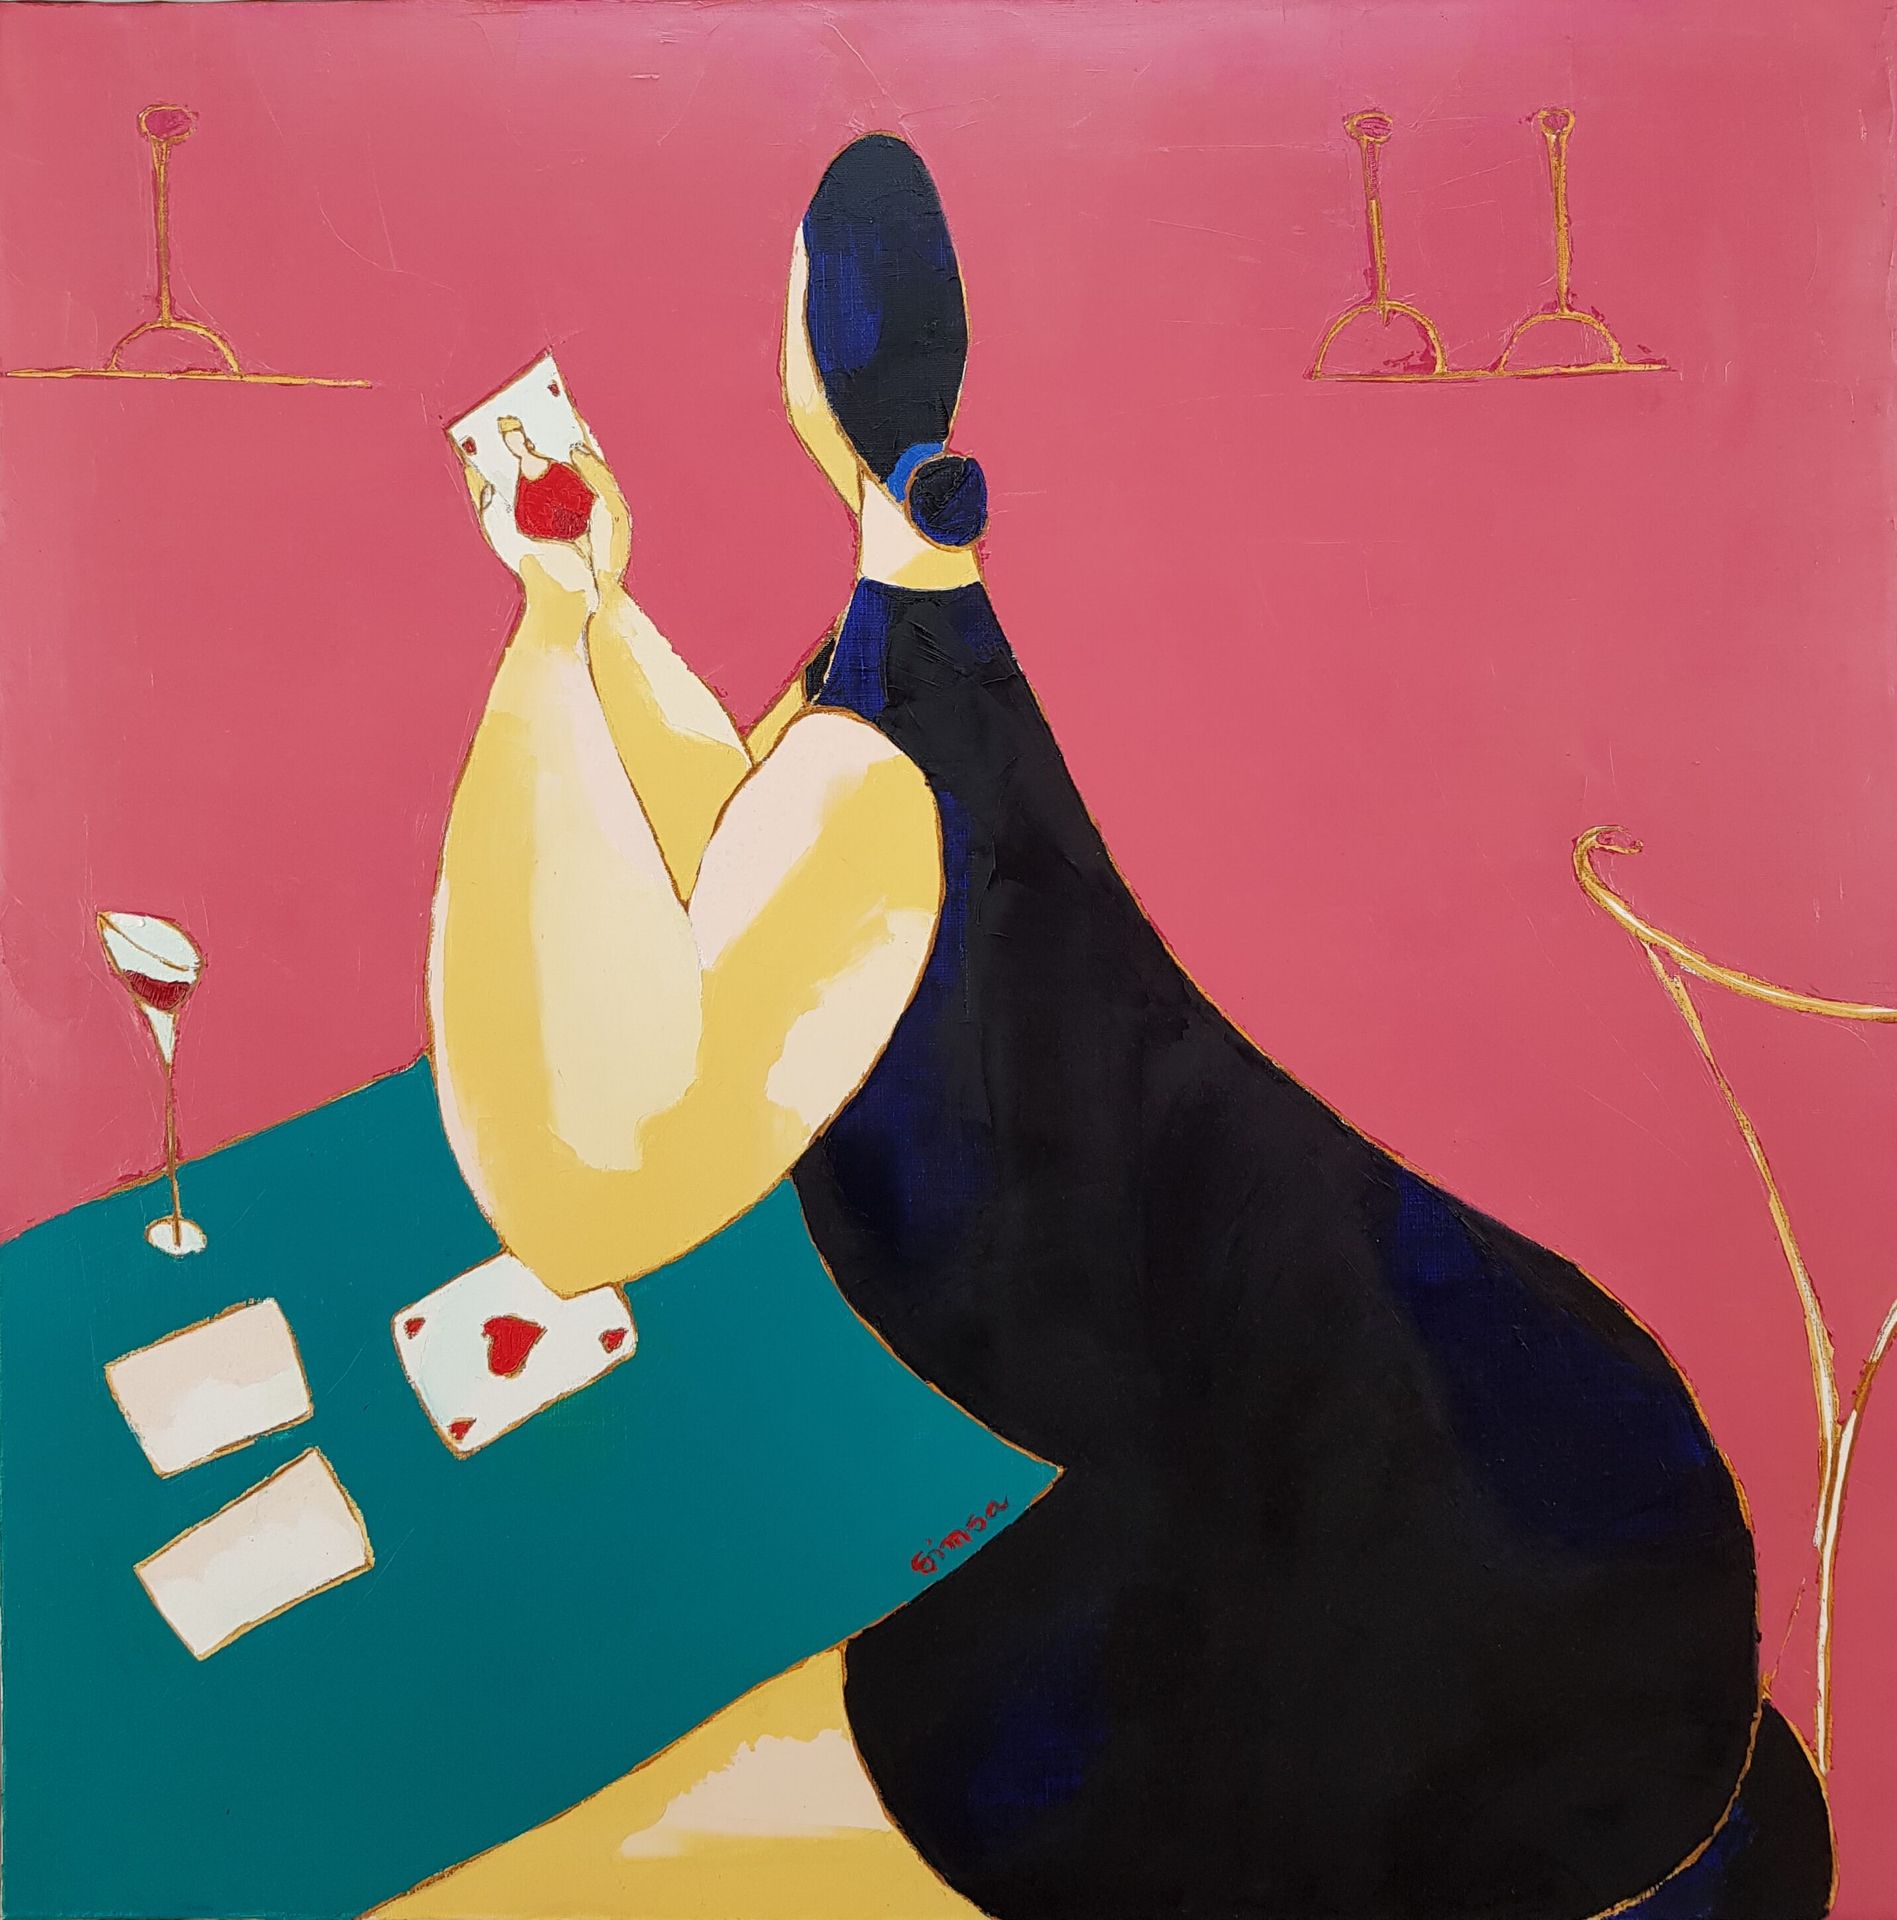 Null Patricia SIMSA (1961)
"牌手"。
布面油画
签名的中下部
高80 x 宽80厘米